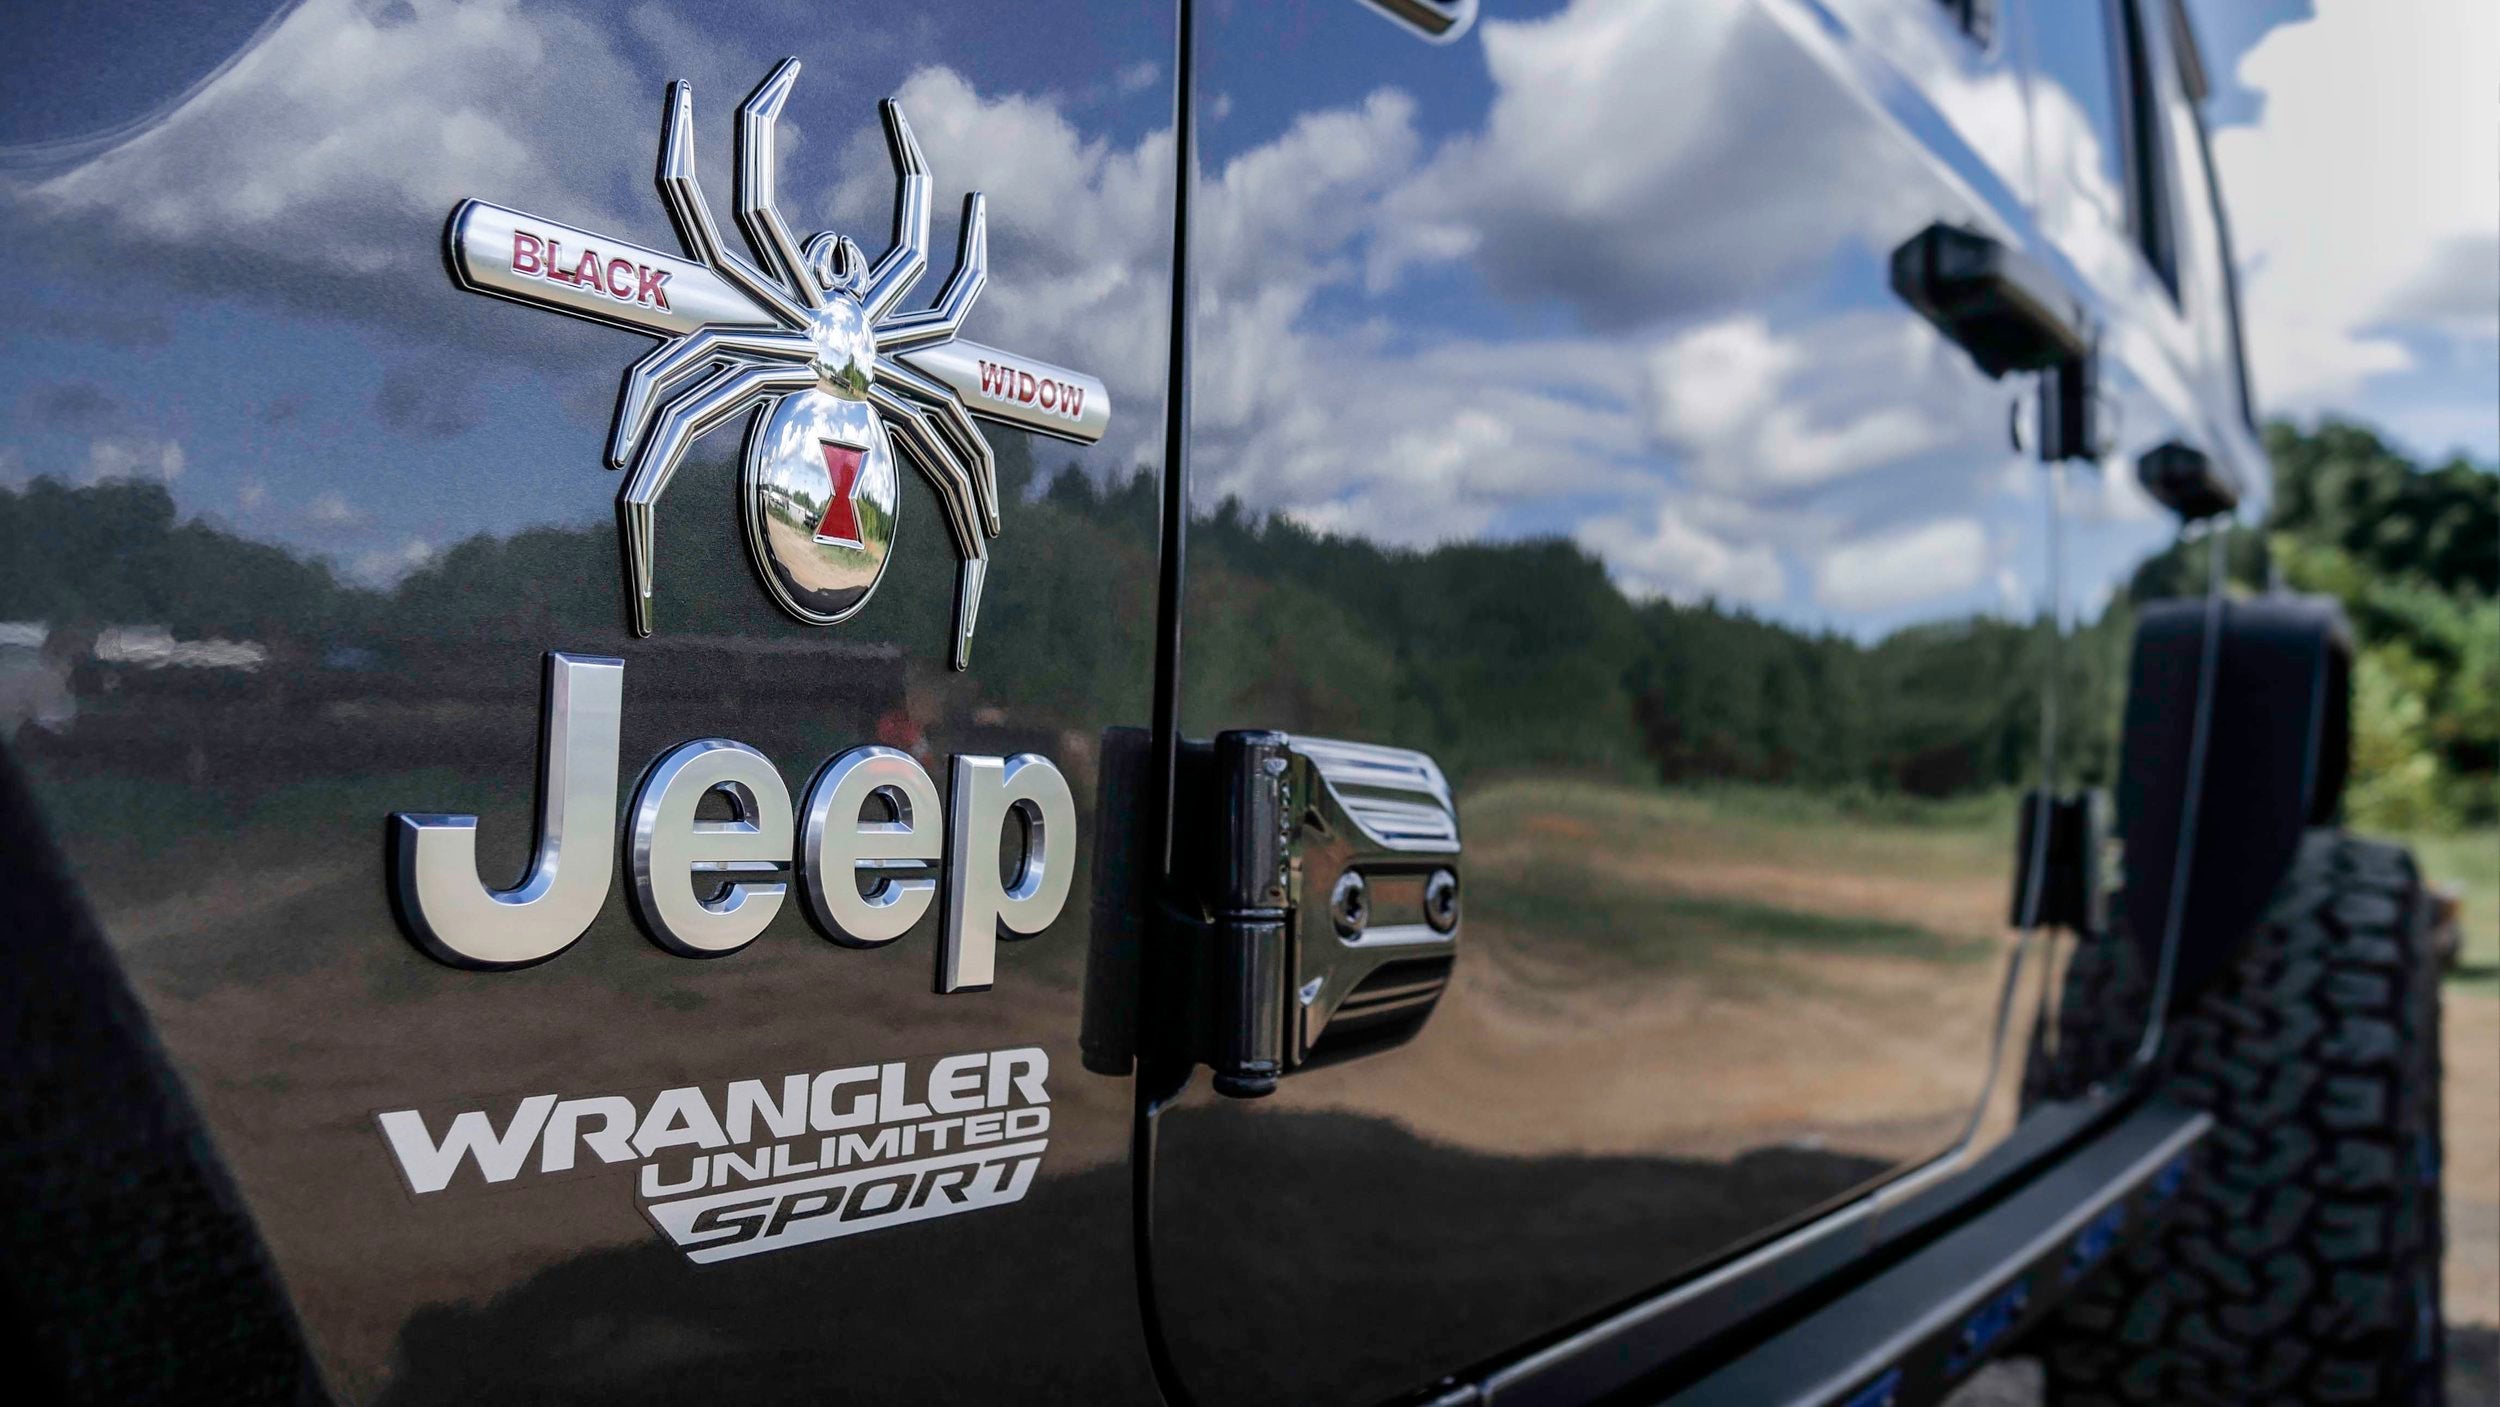 Jeep Black Widow Badge